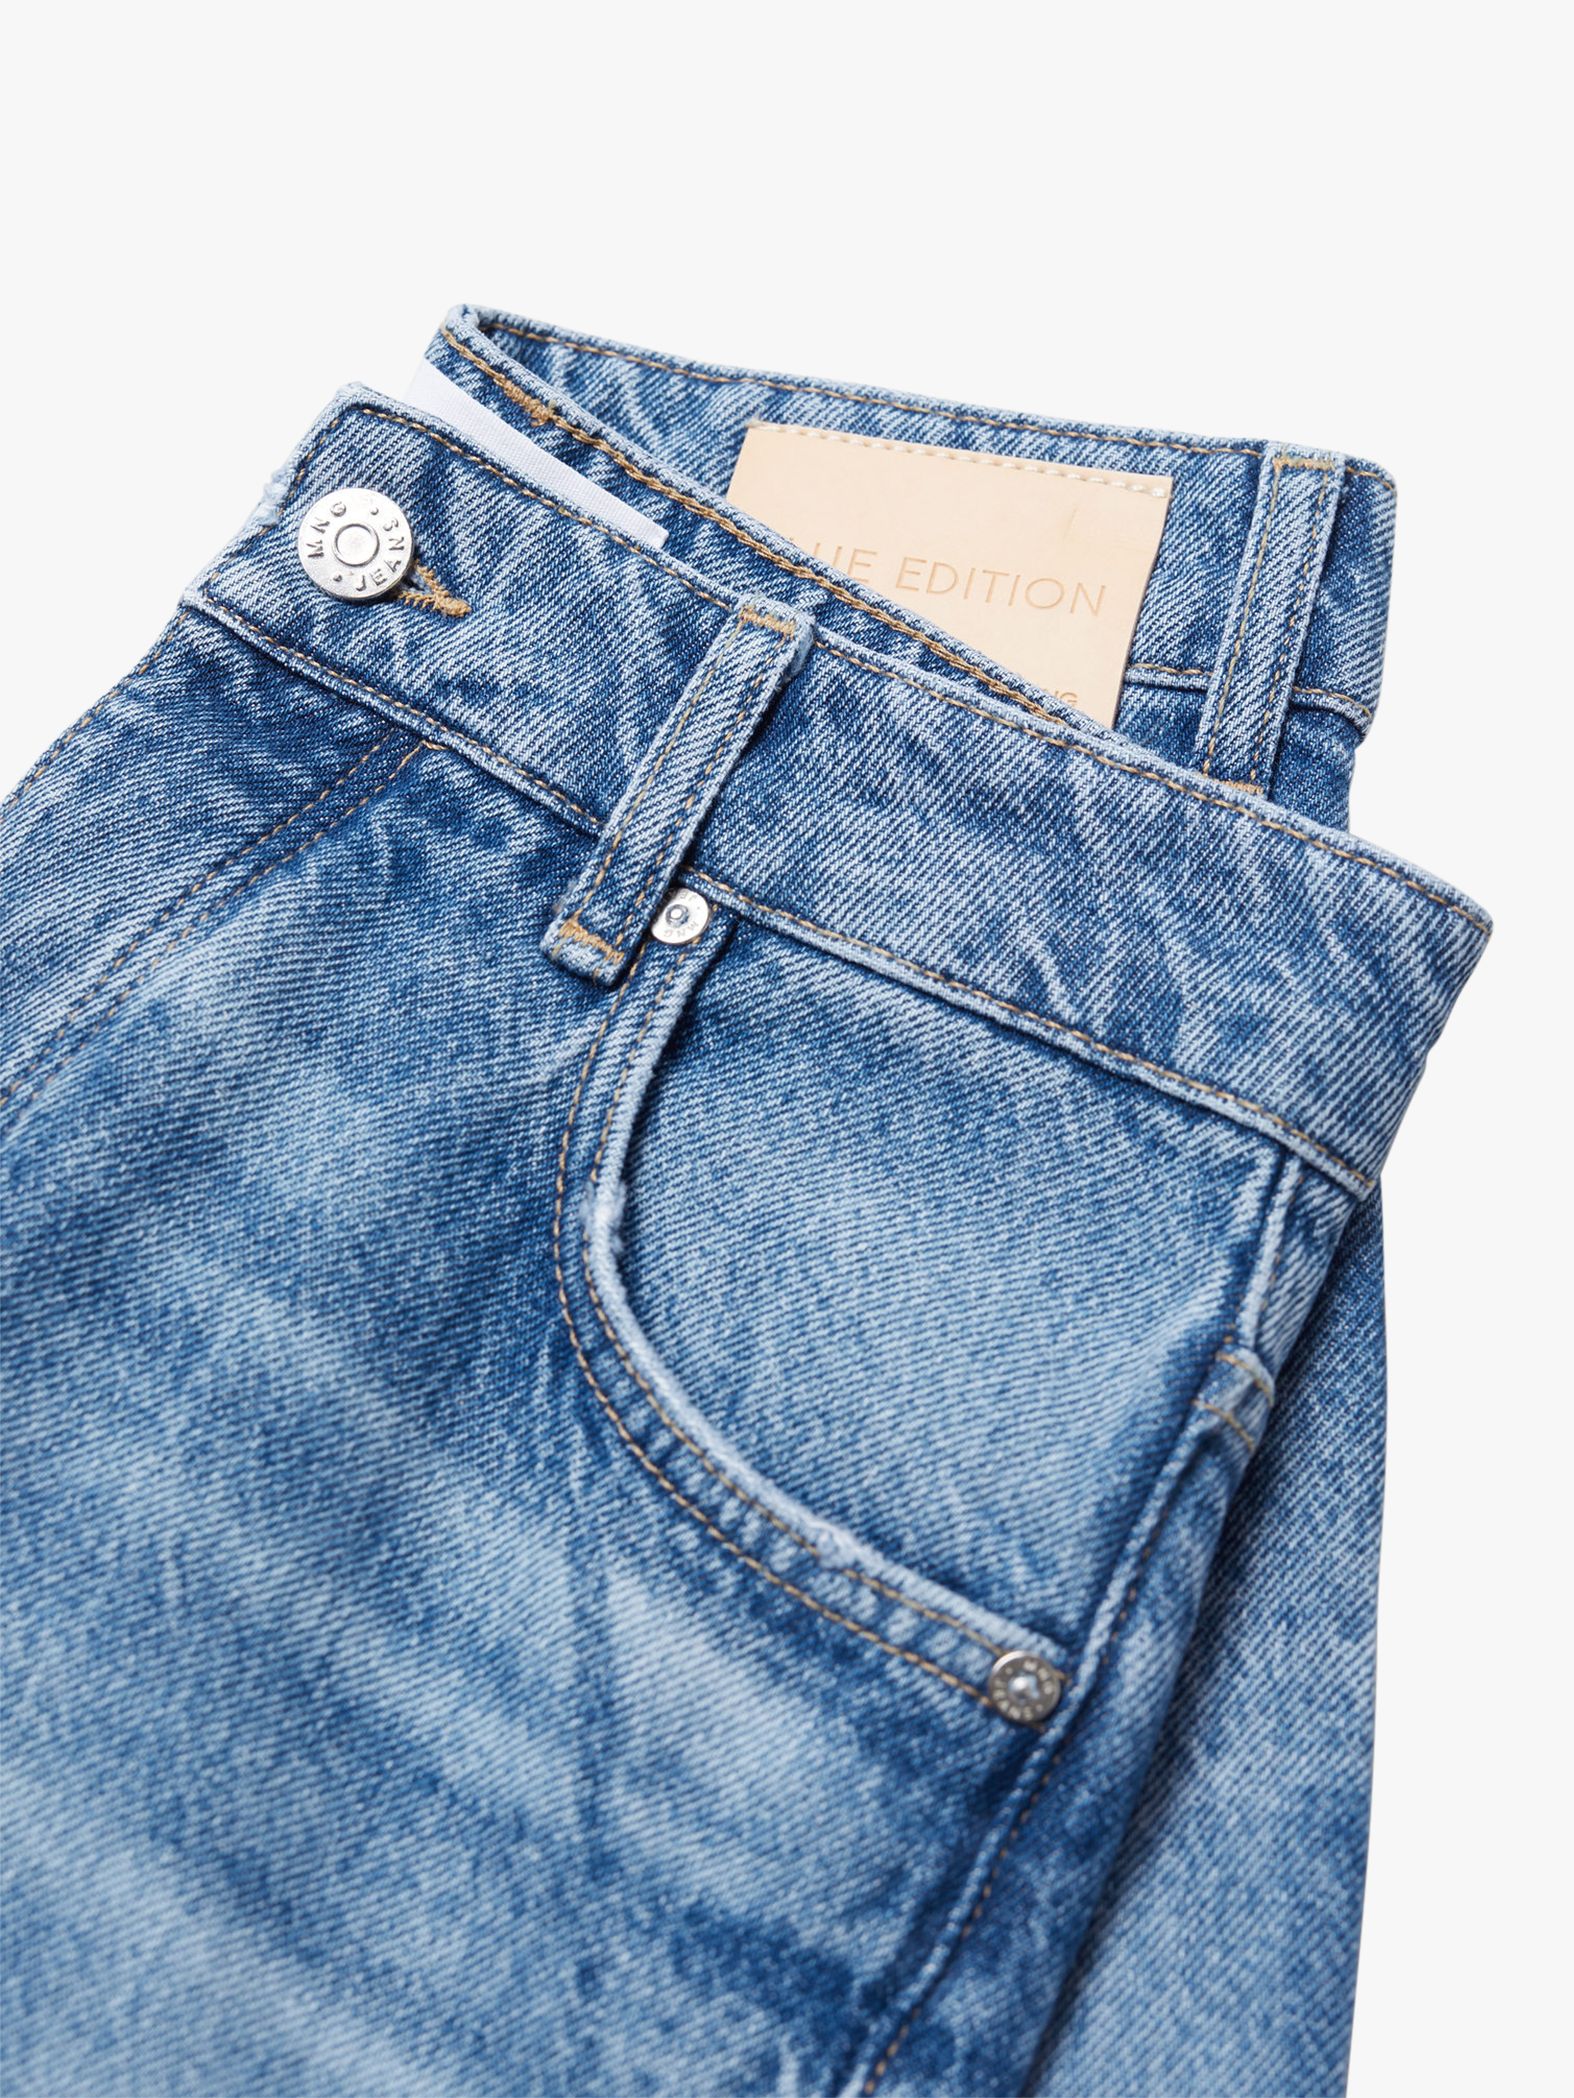 Mango Turn-Up Hem Straight Leg Jeans, Medium Blue at John Lewis & Partners